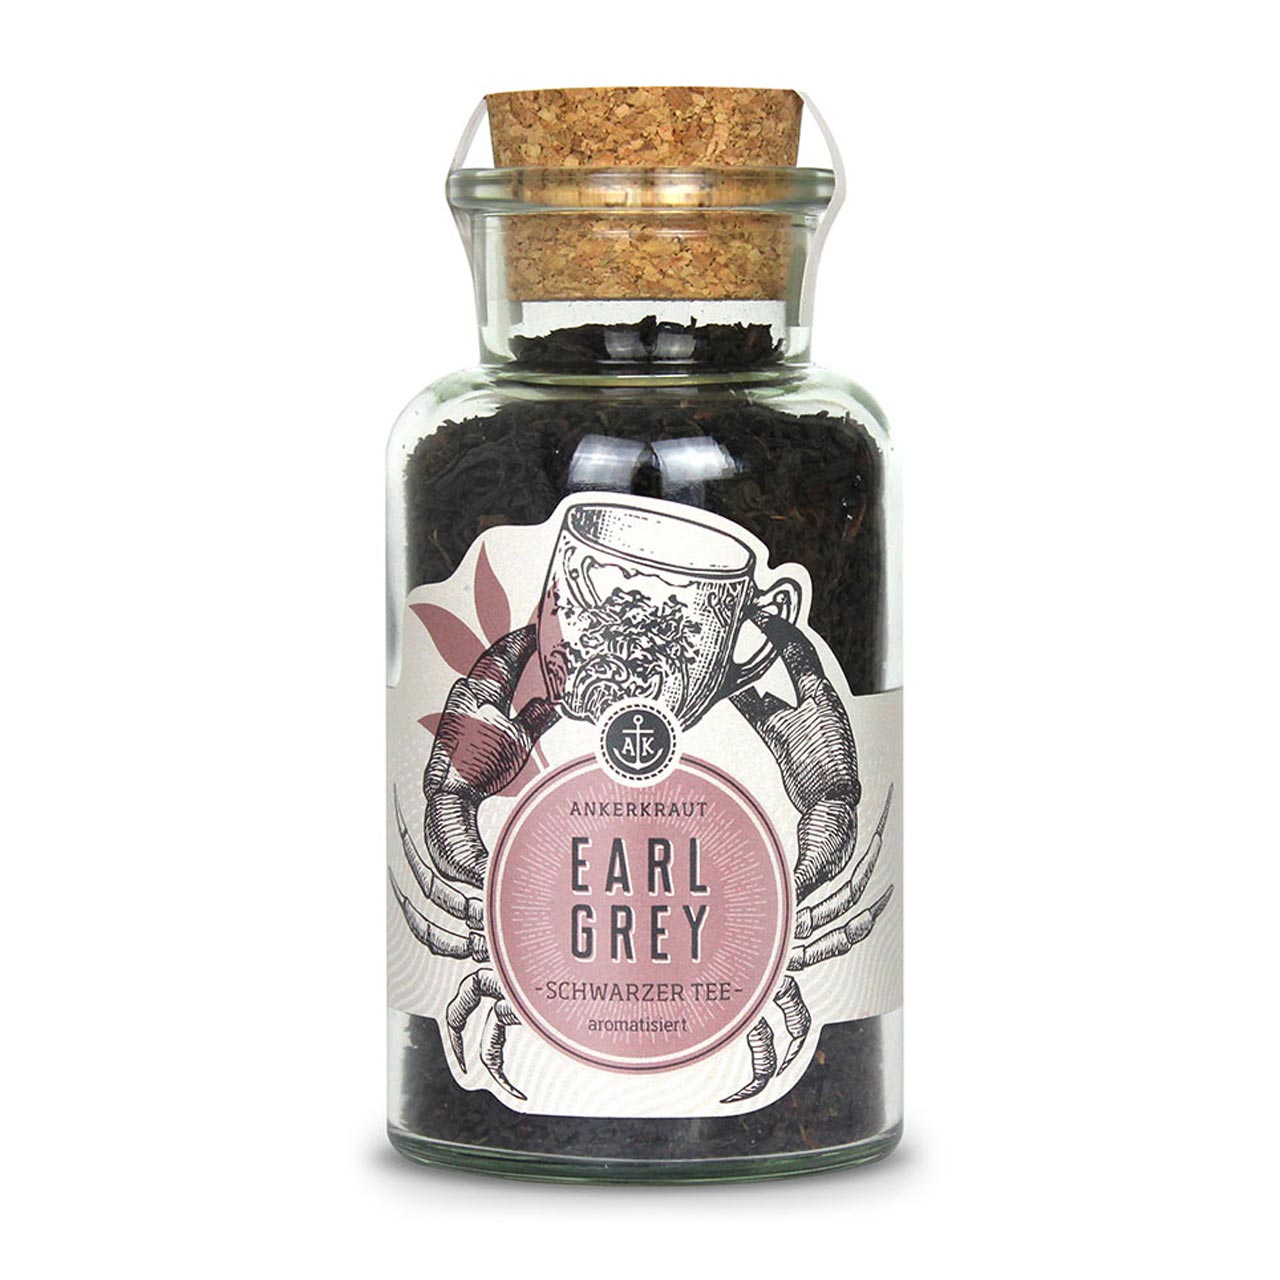 Ankerkraut Earl Grey - schwarzer Tee